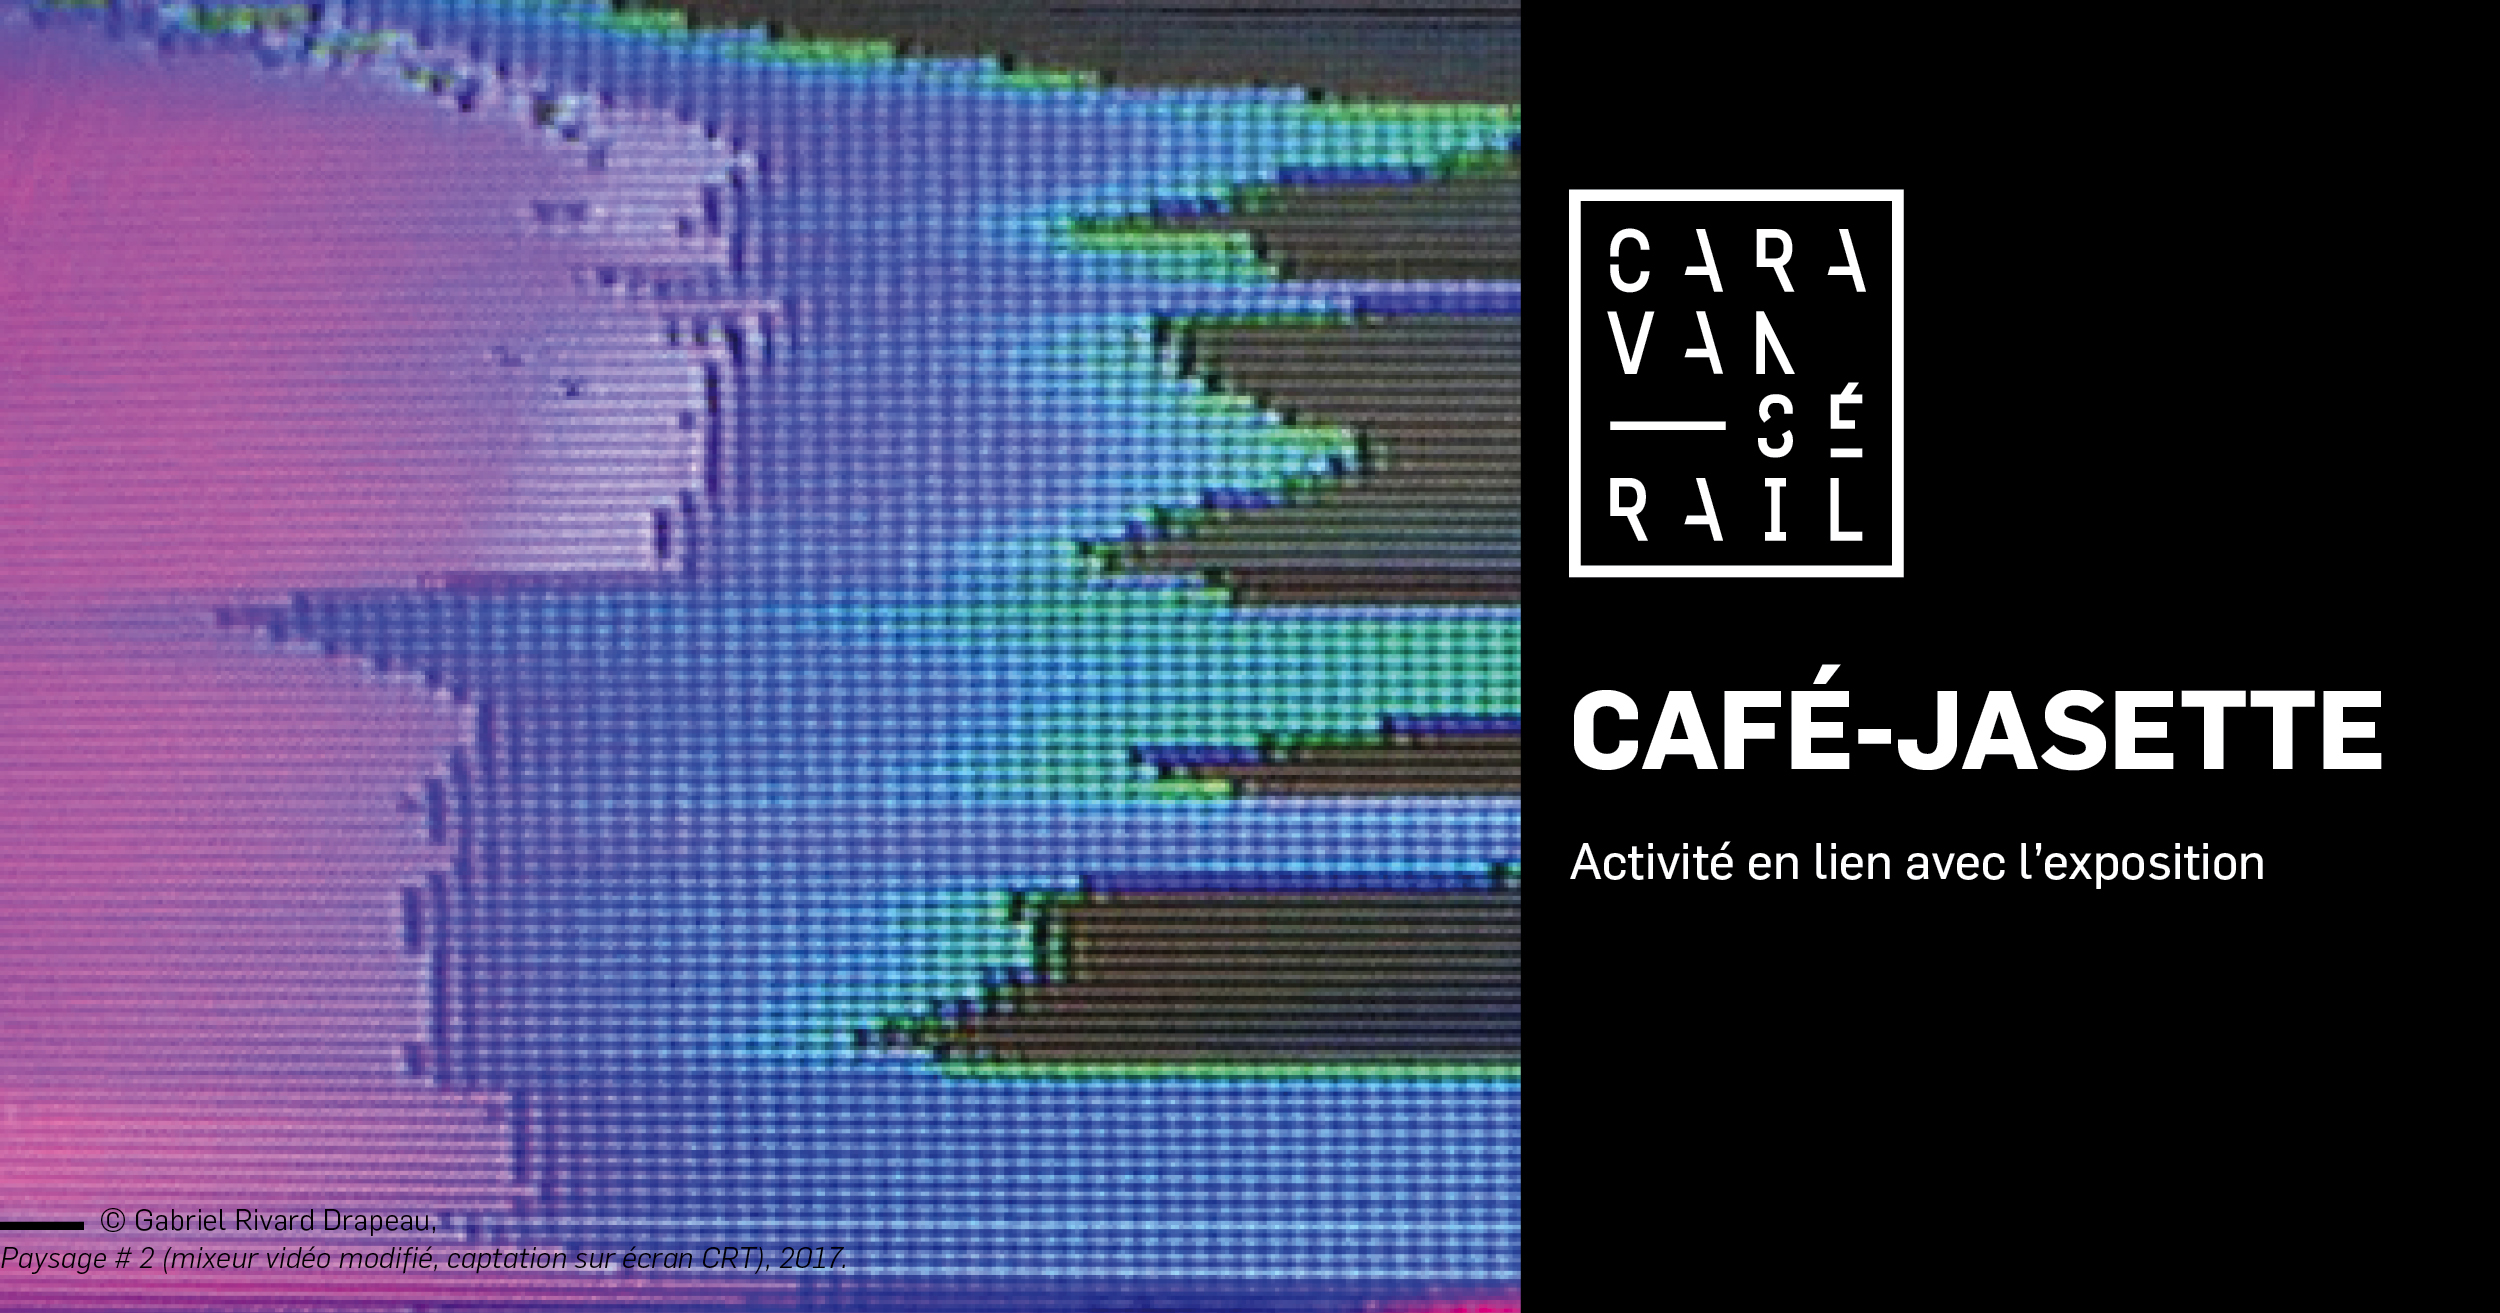 FACEBOOK GabrielRDrapeau Caravansérail 2019 cafe jasette bon